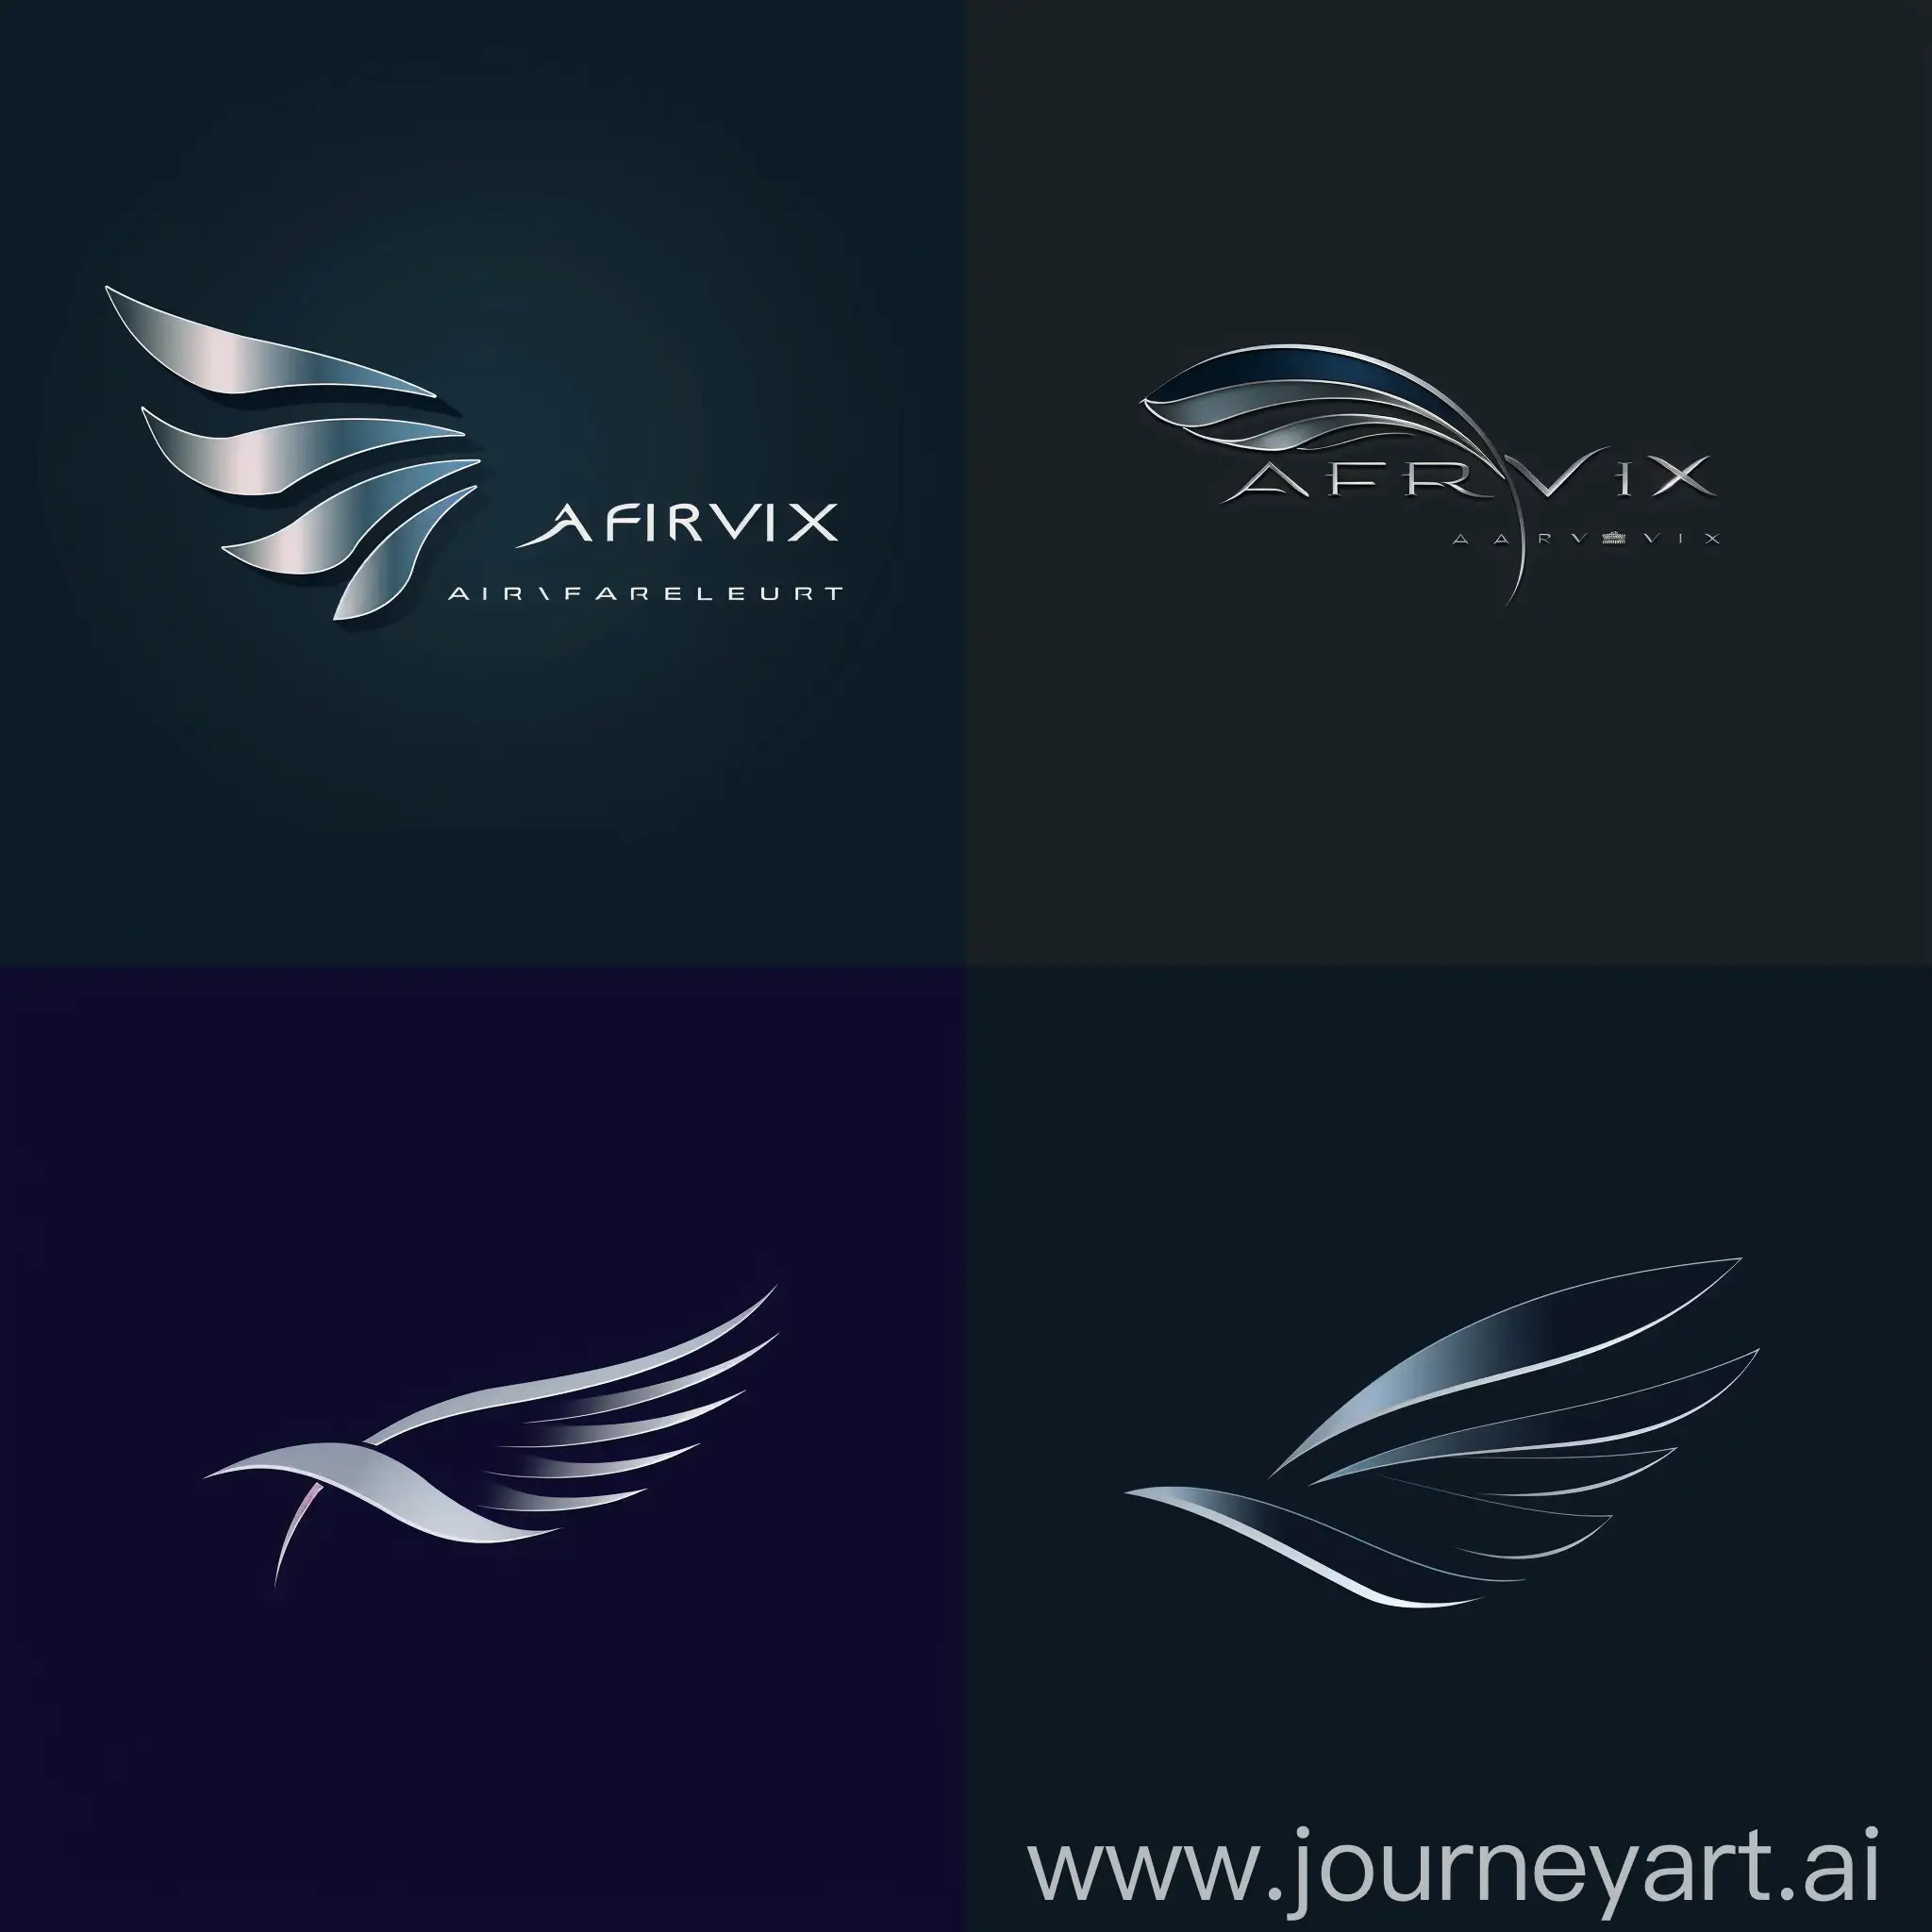 Elegant-AeroVix-Airline-Logo-Symbolizing-Innovation-and-Trust